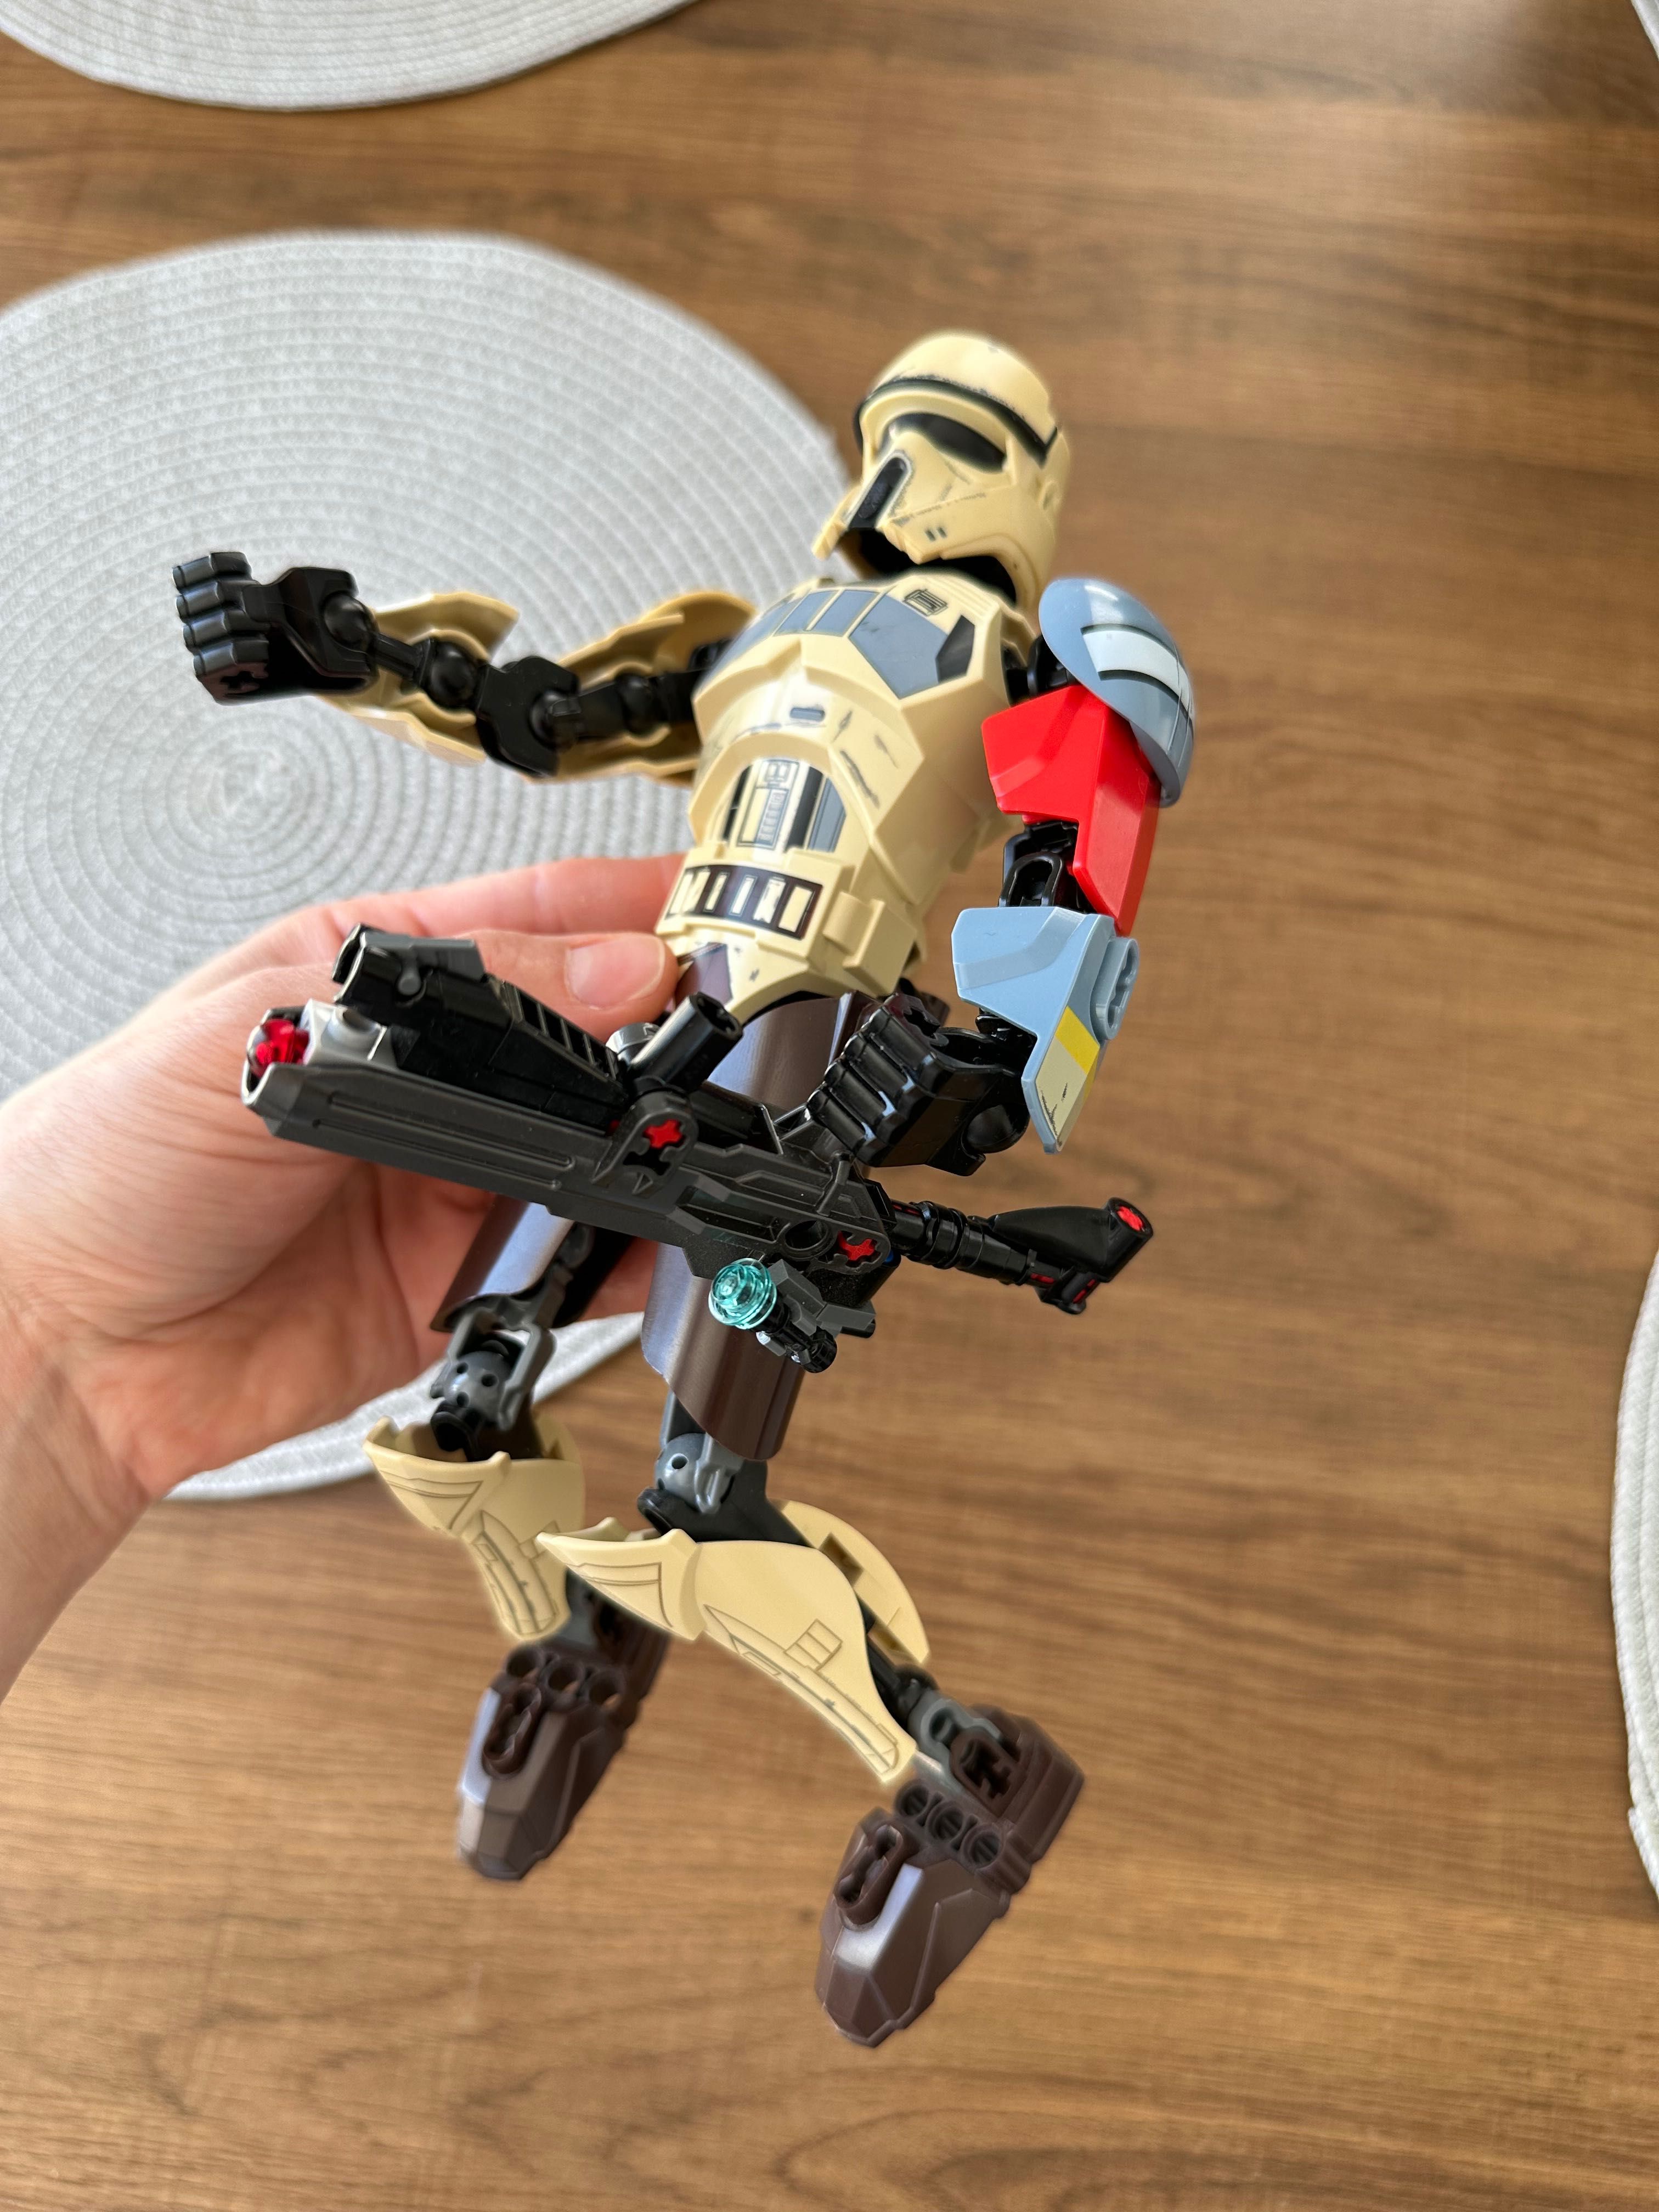 Lego star wars робот